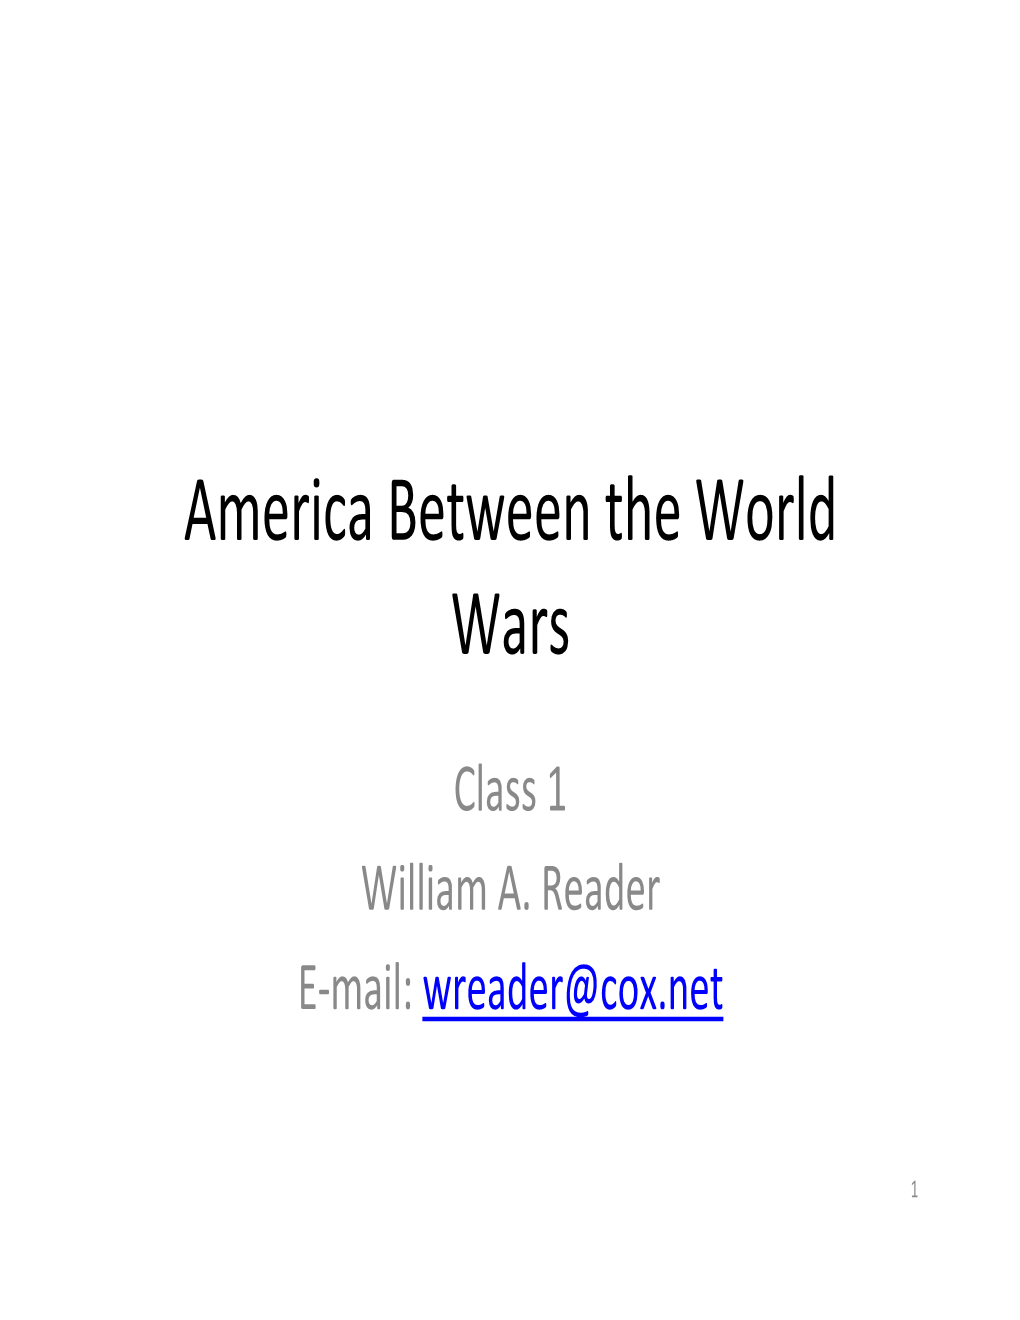 America Between the World Wars